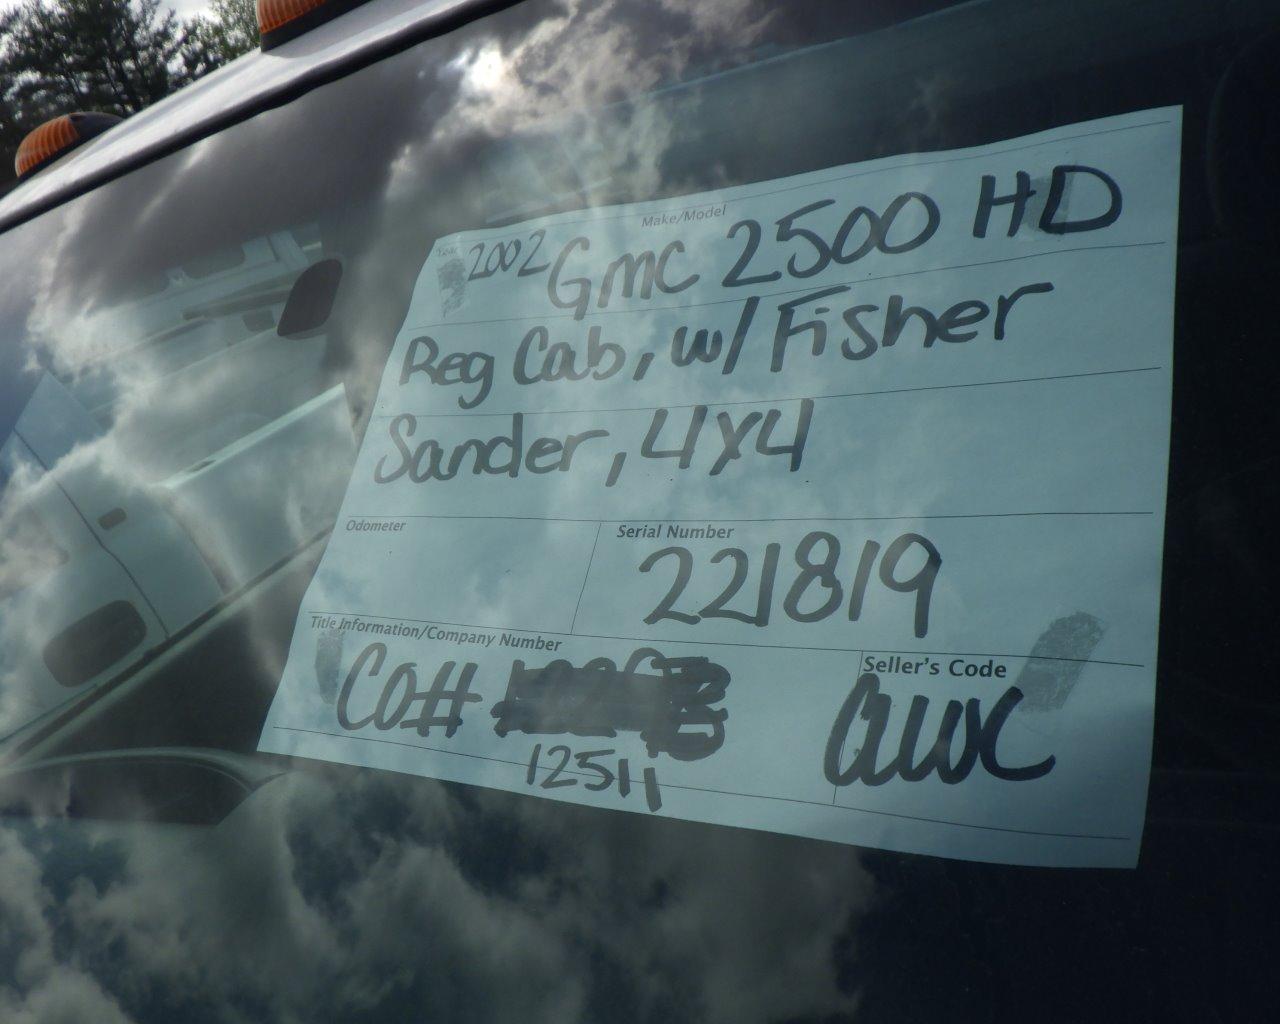 2002 GMC 2500 HD Reg Cab   w/Fisher Sander   4x4 s/n:221819